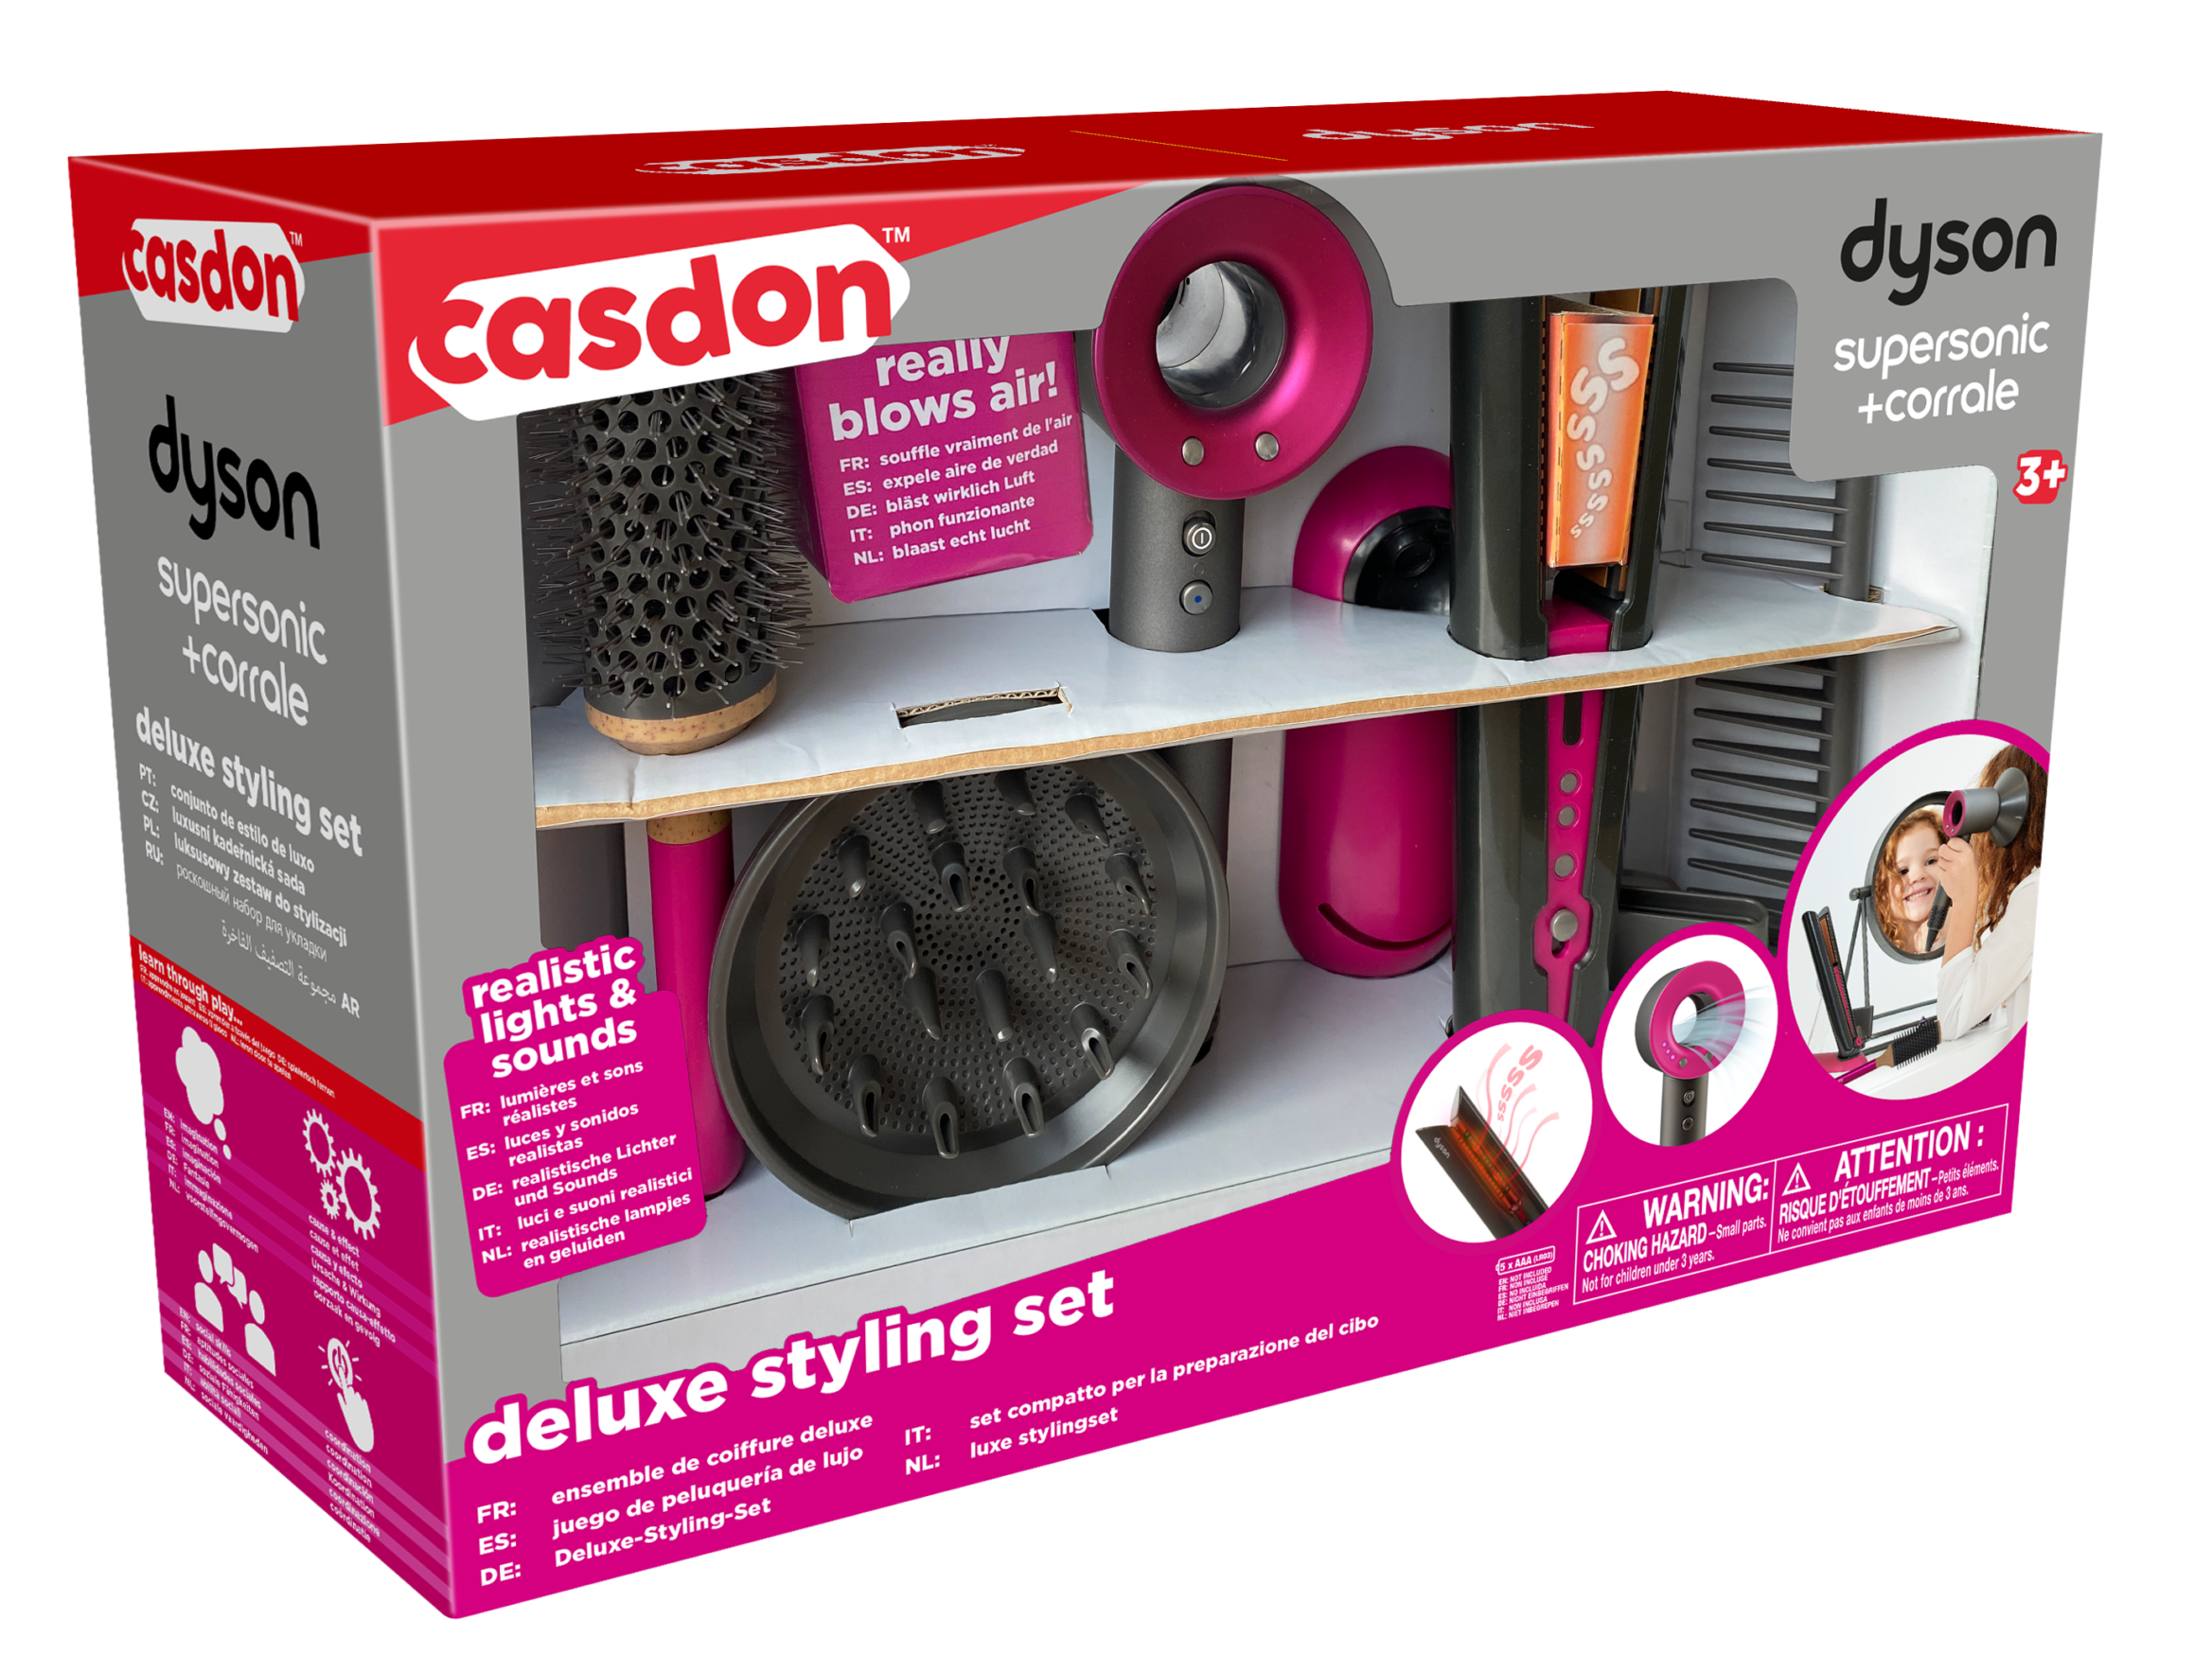 Casdon launches Dyson hair toys -Toy World Magazine